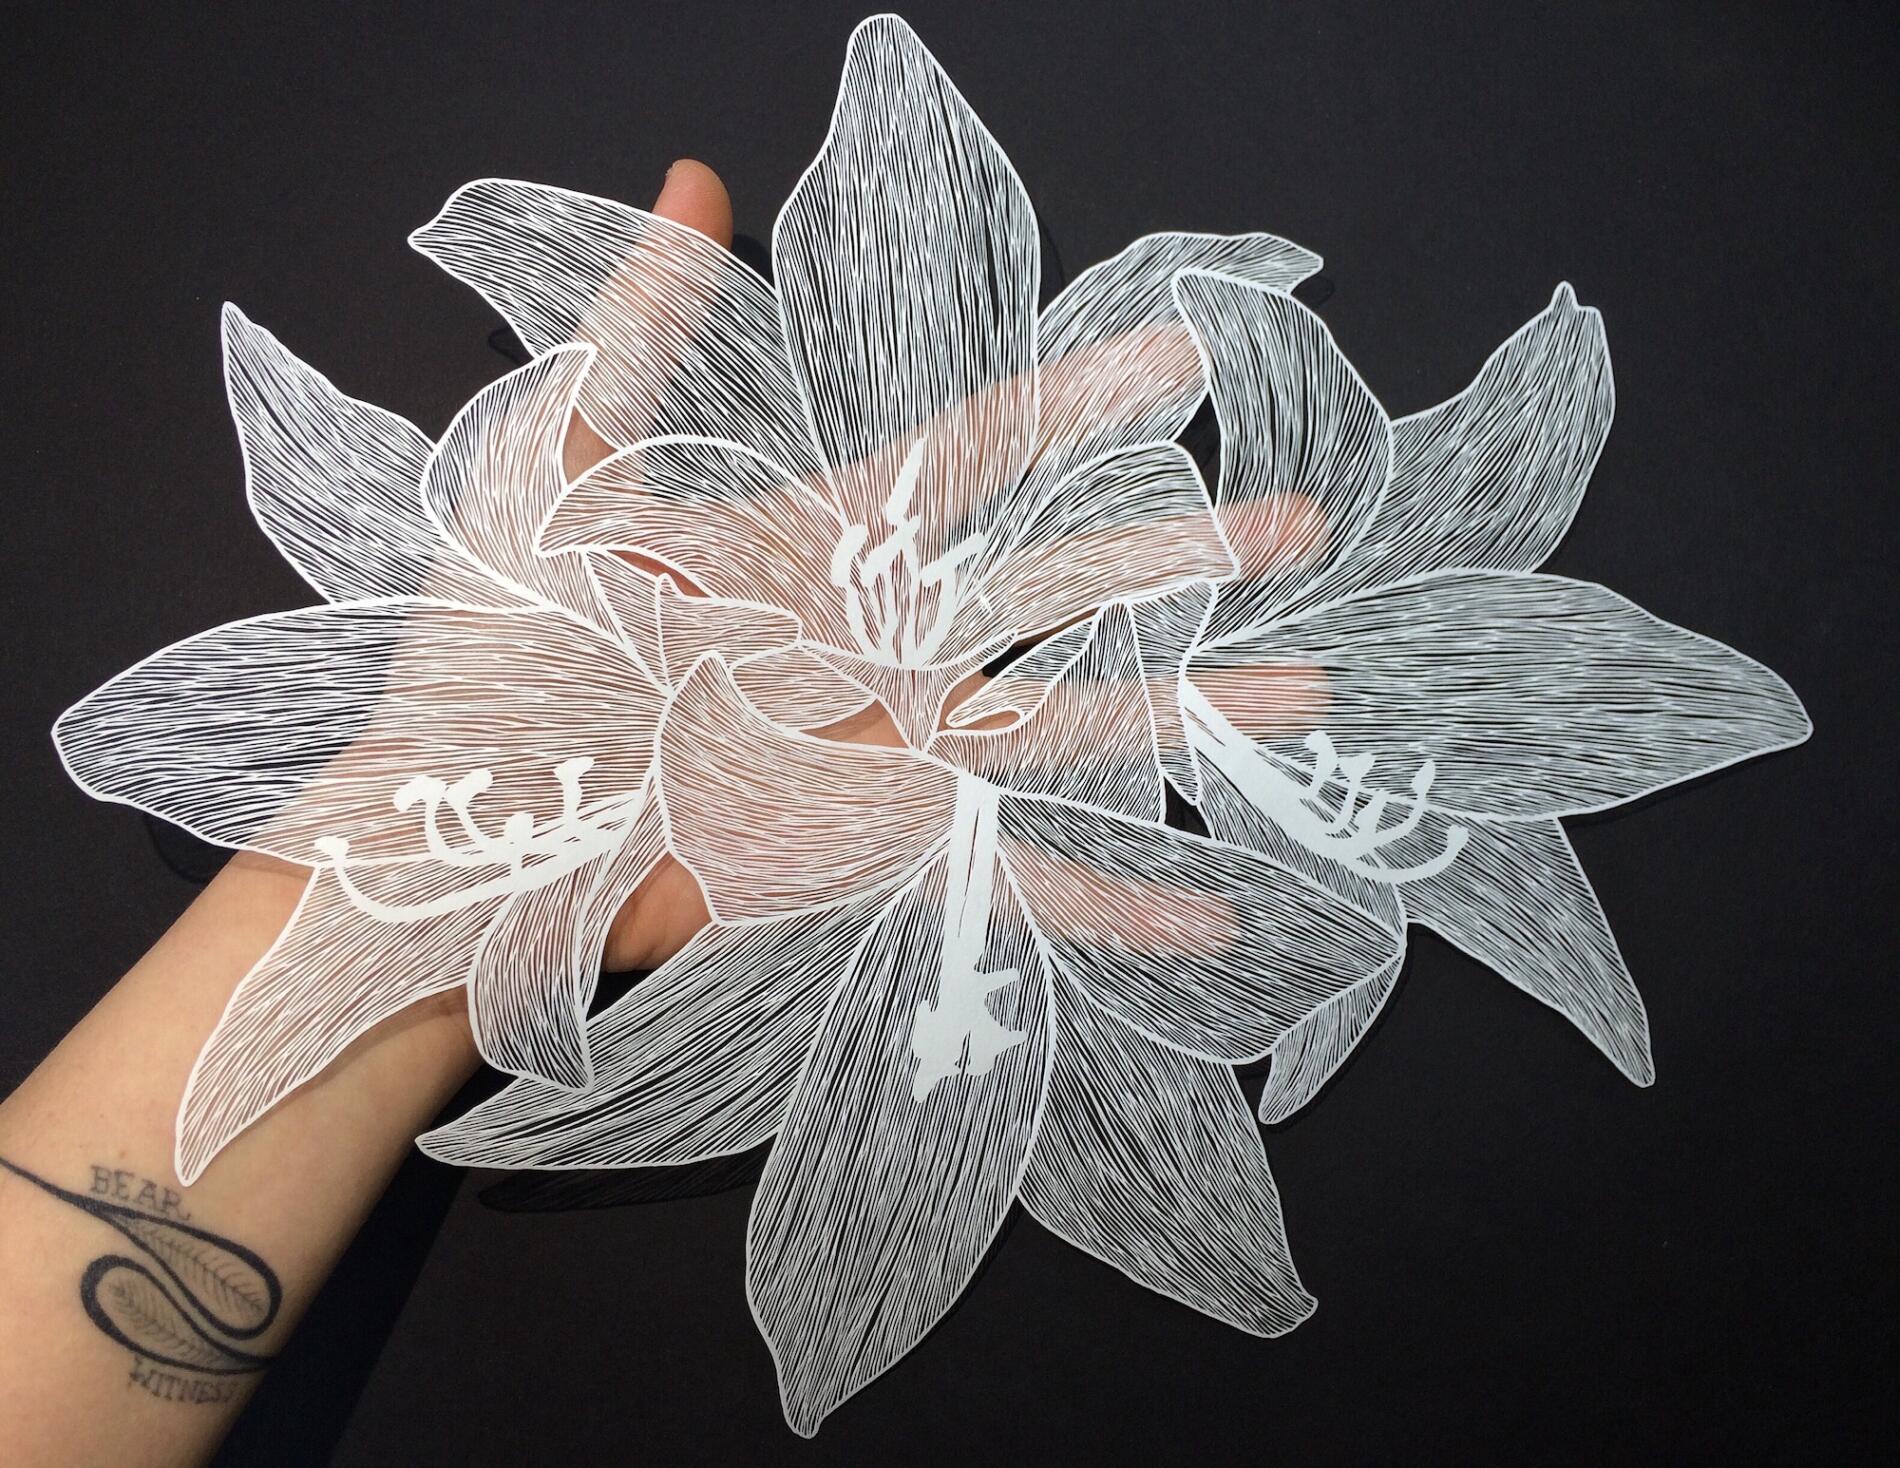 Maude White recortes de papel flores